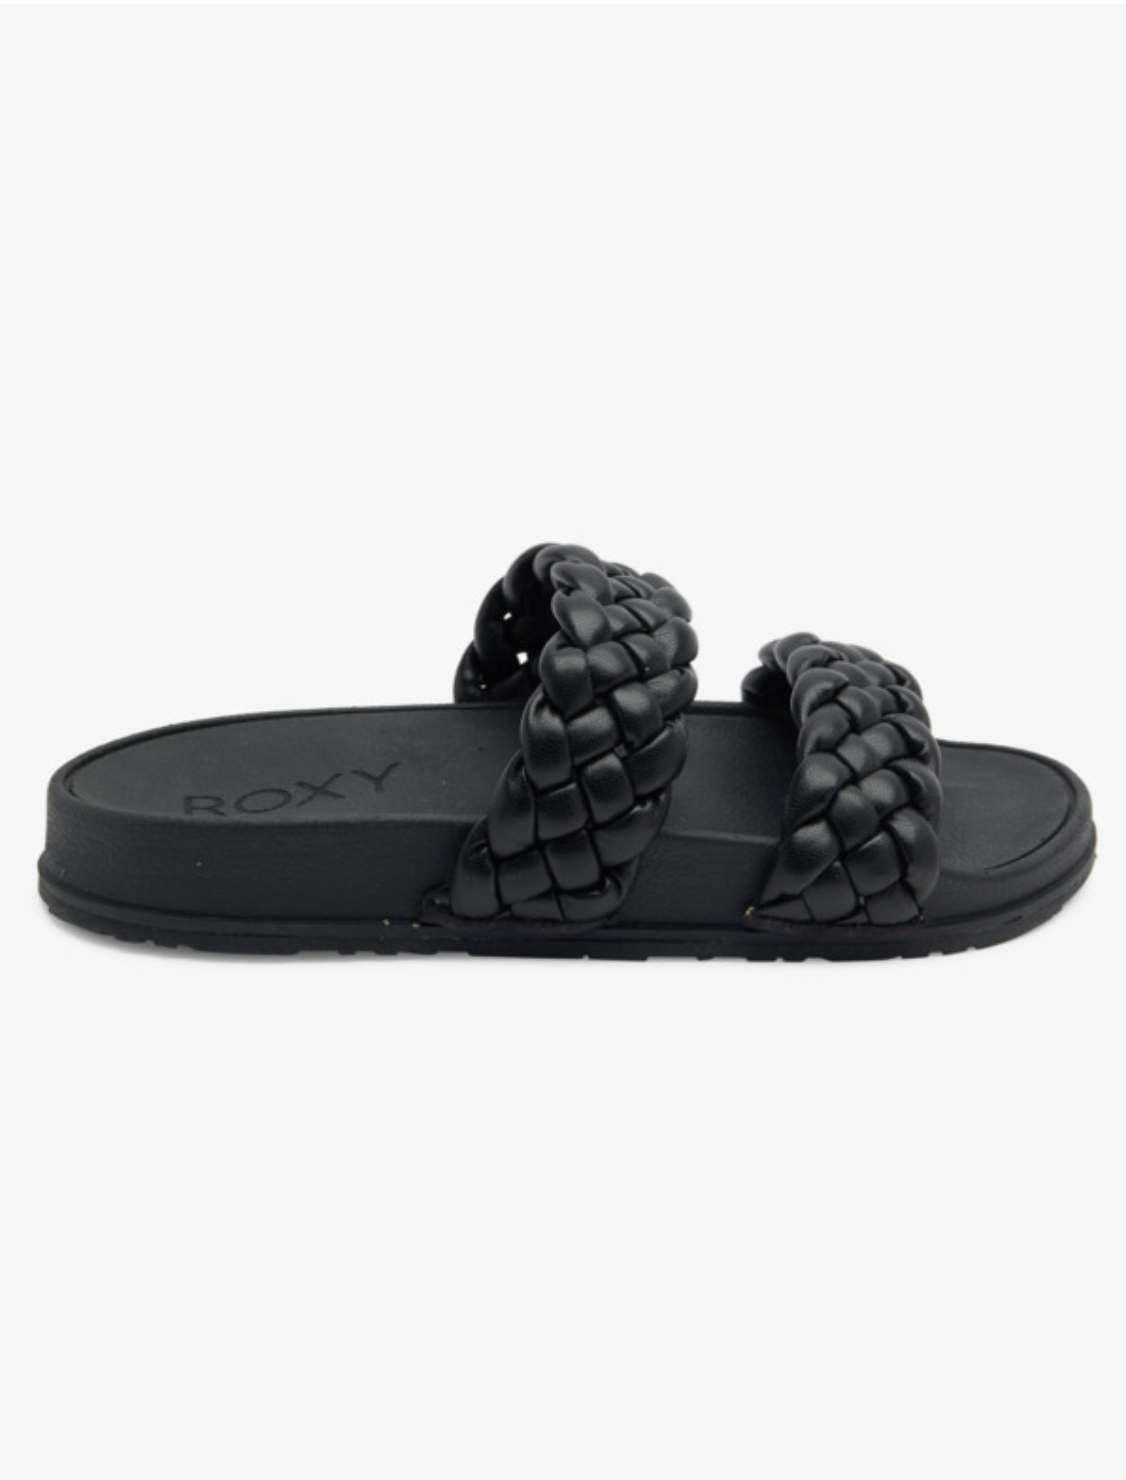 ROXY Slippy Braided Water-Friendly - Sandals for Women